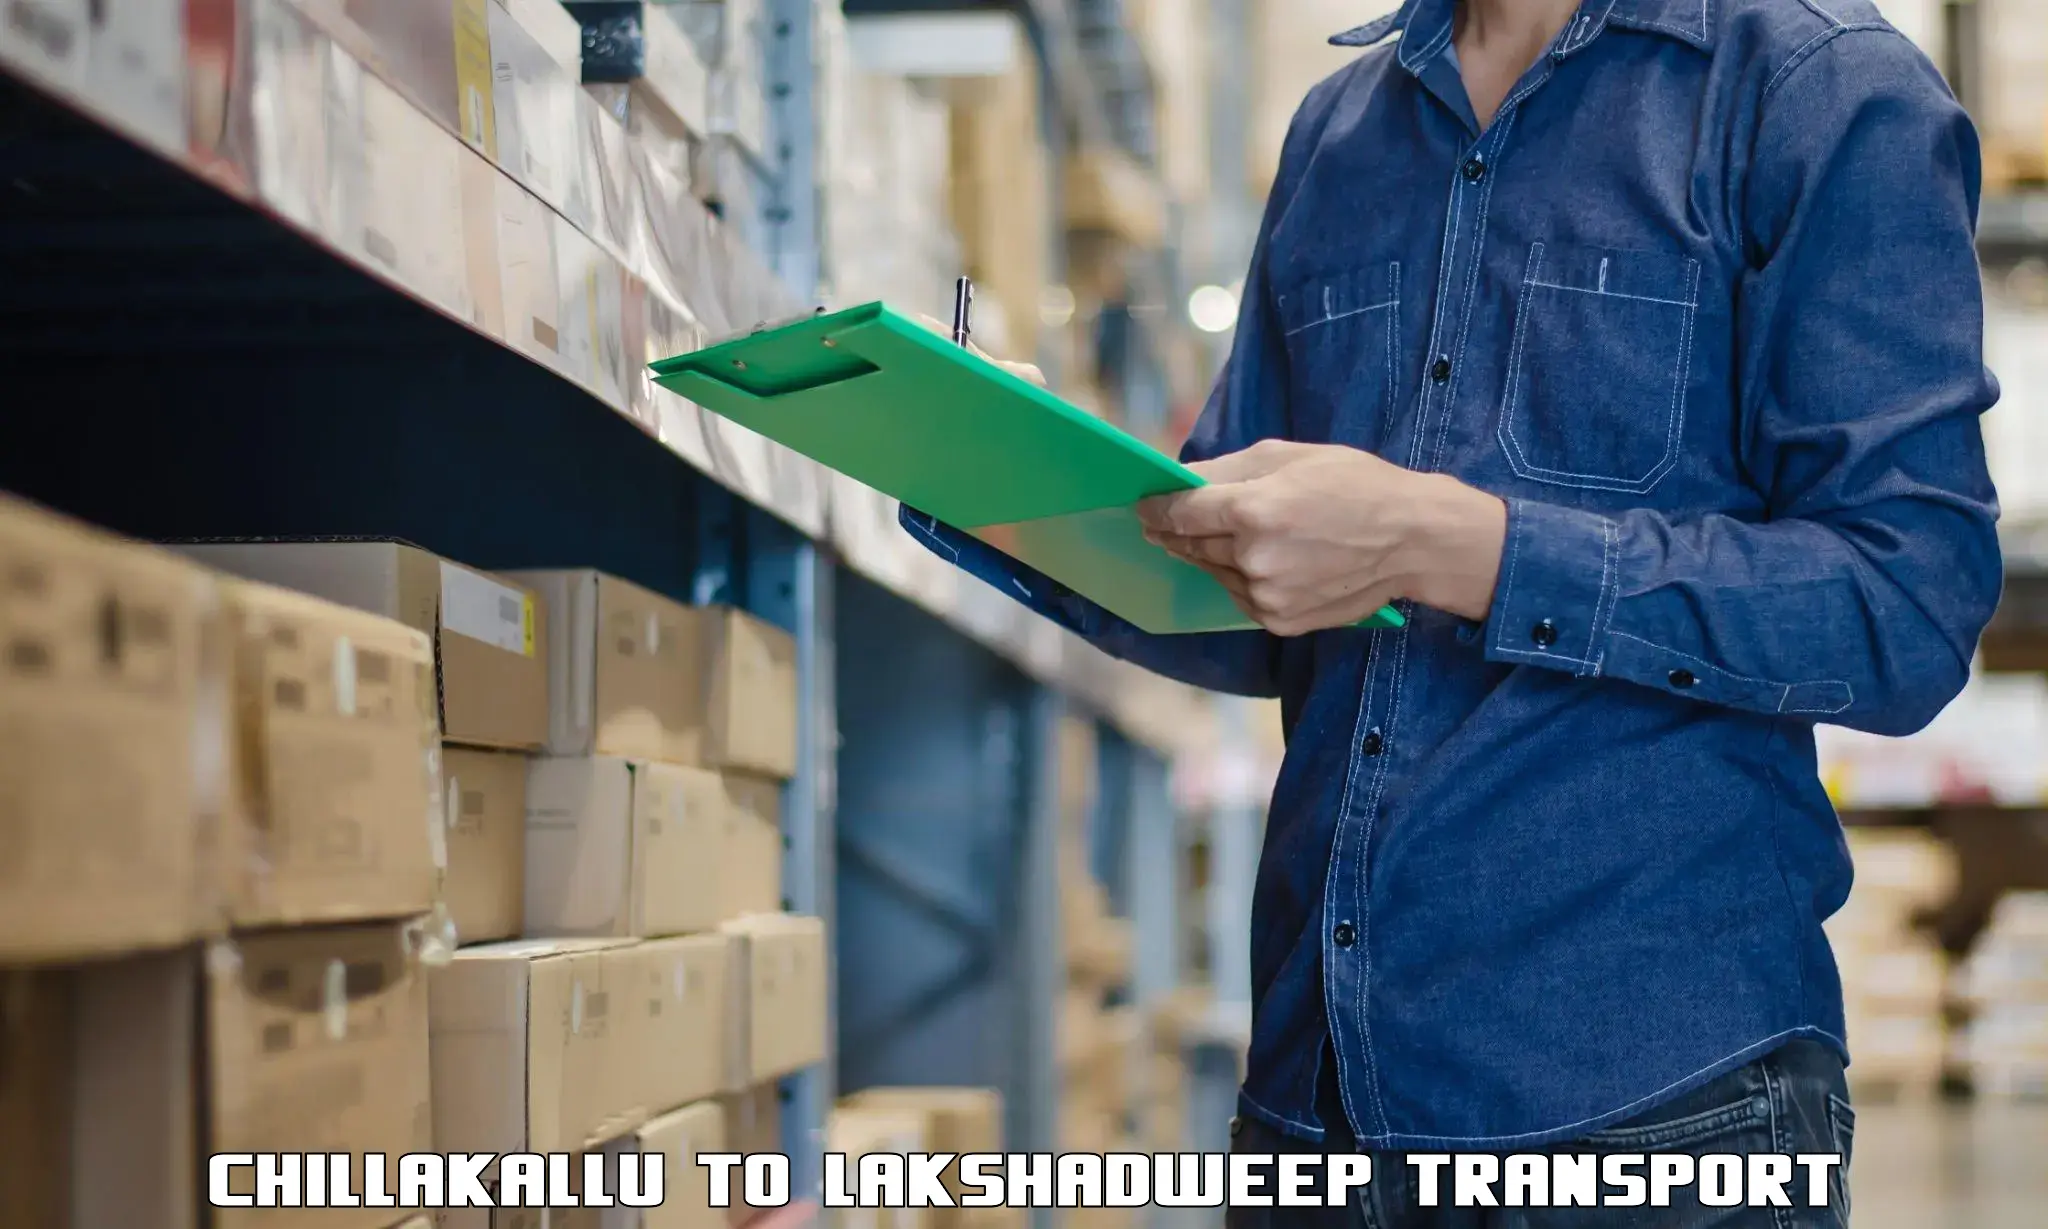 Transport shared services Chillakallu to Lakshadweep